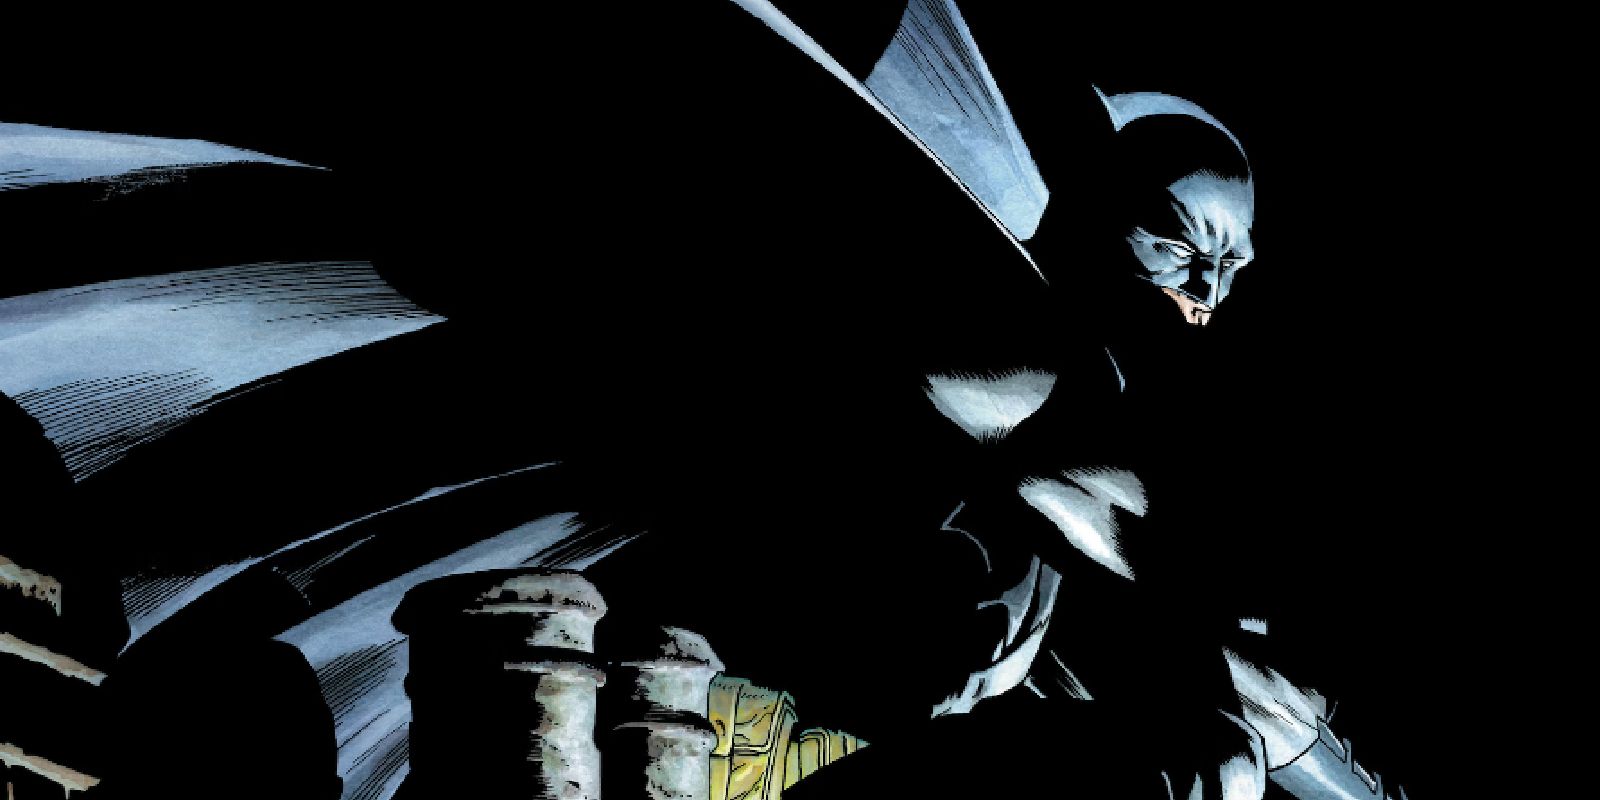 Image of Joe Quesada from the brooding Batman.